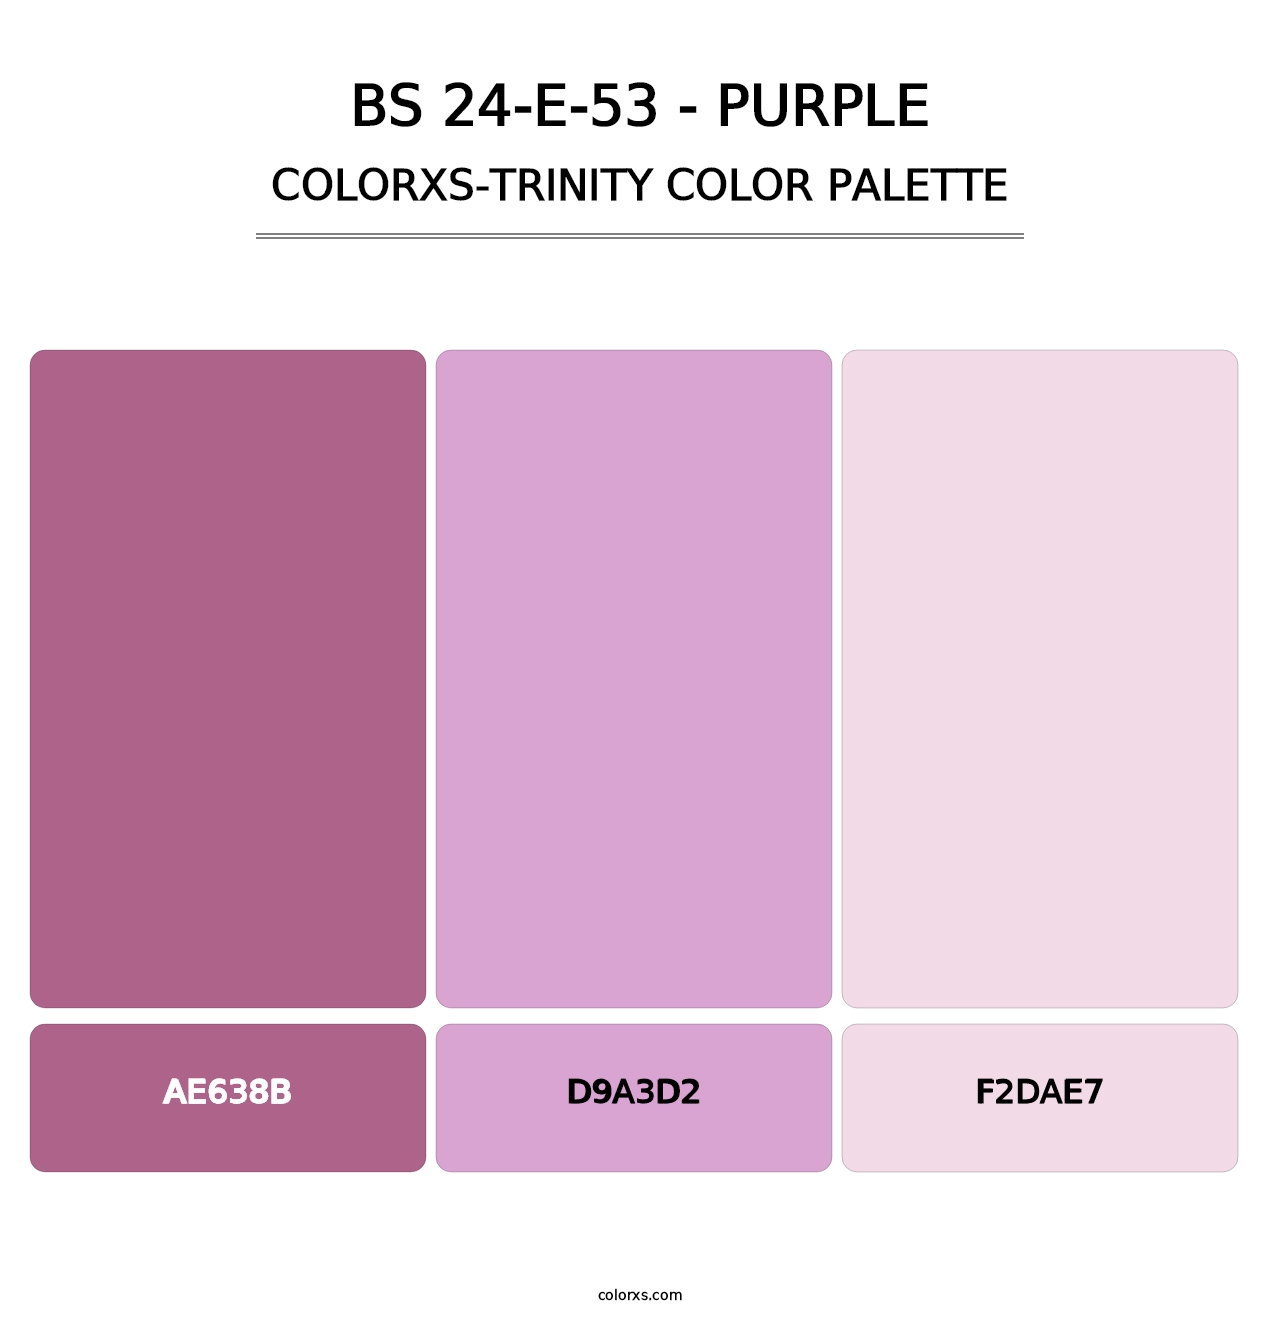 BS 24-E-53 - Purple - Colorxs Trinity Palette